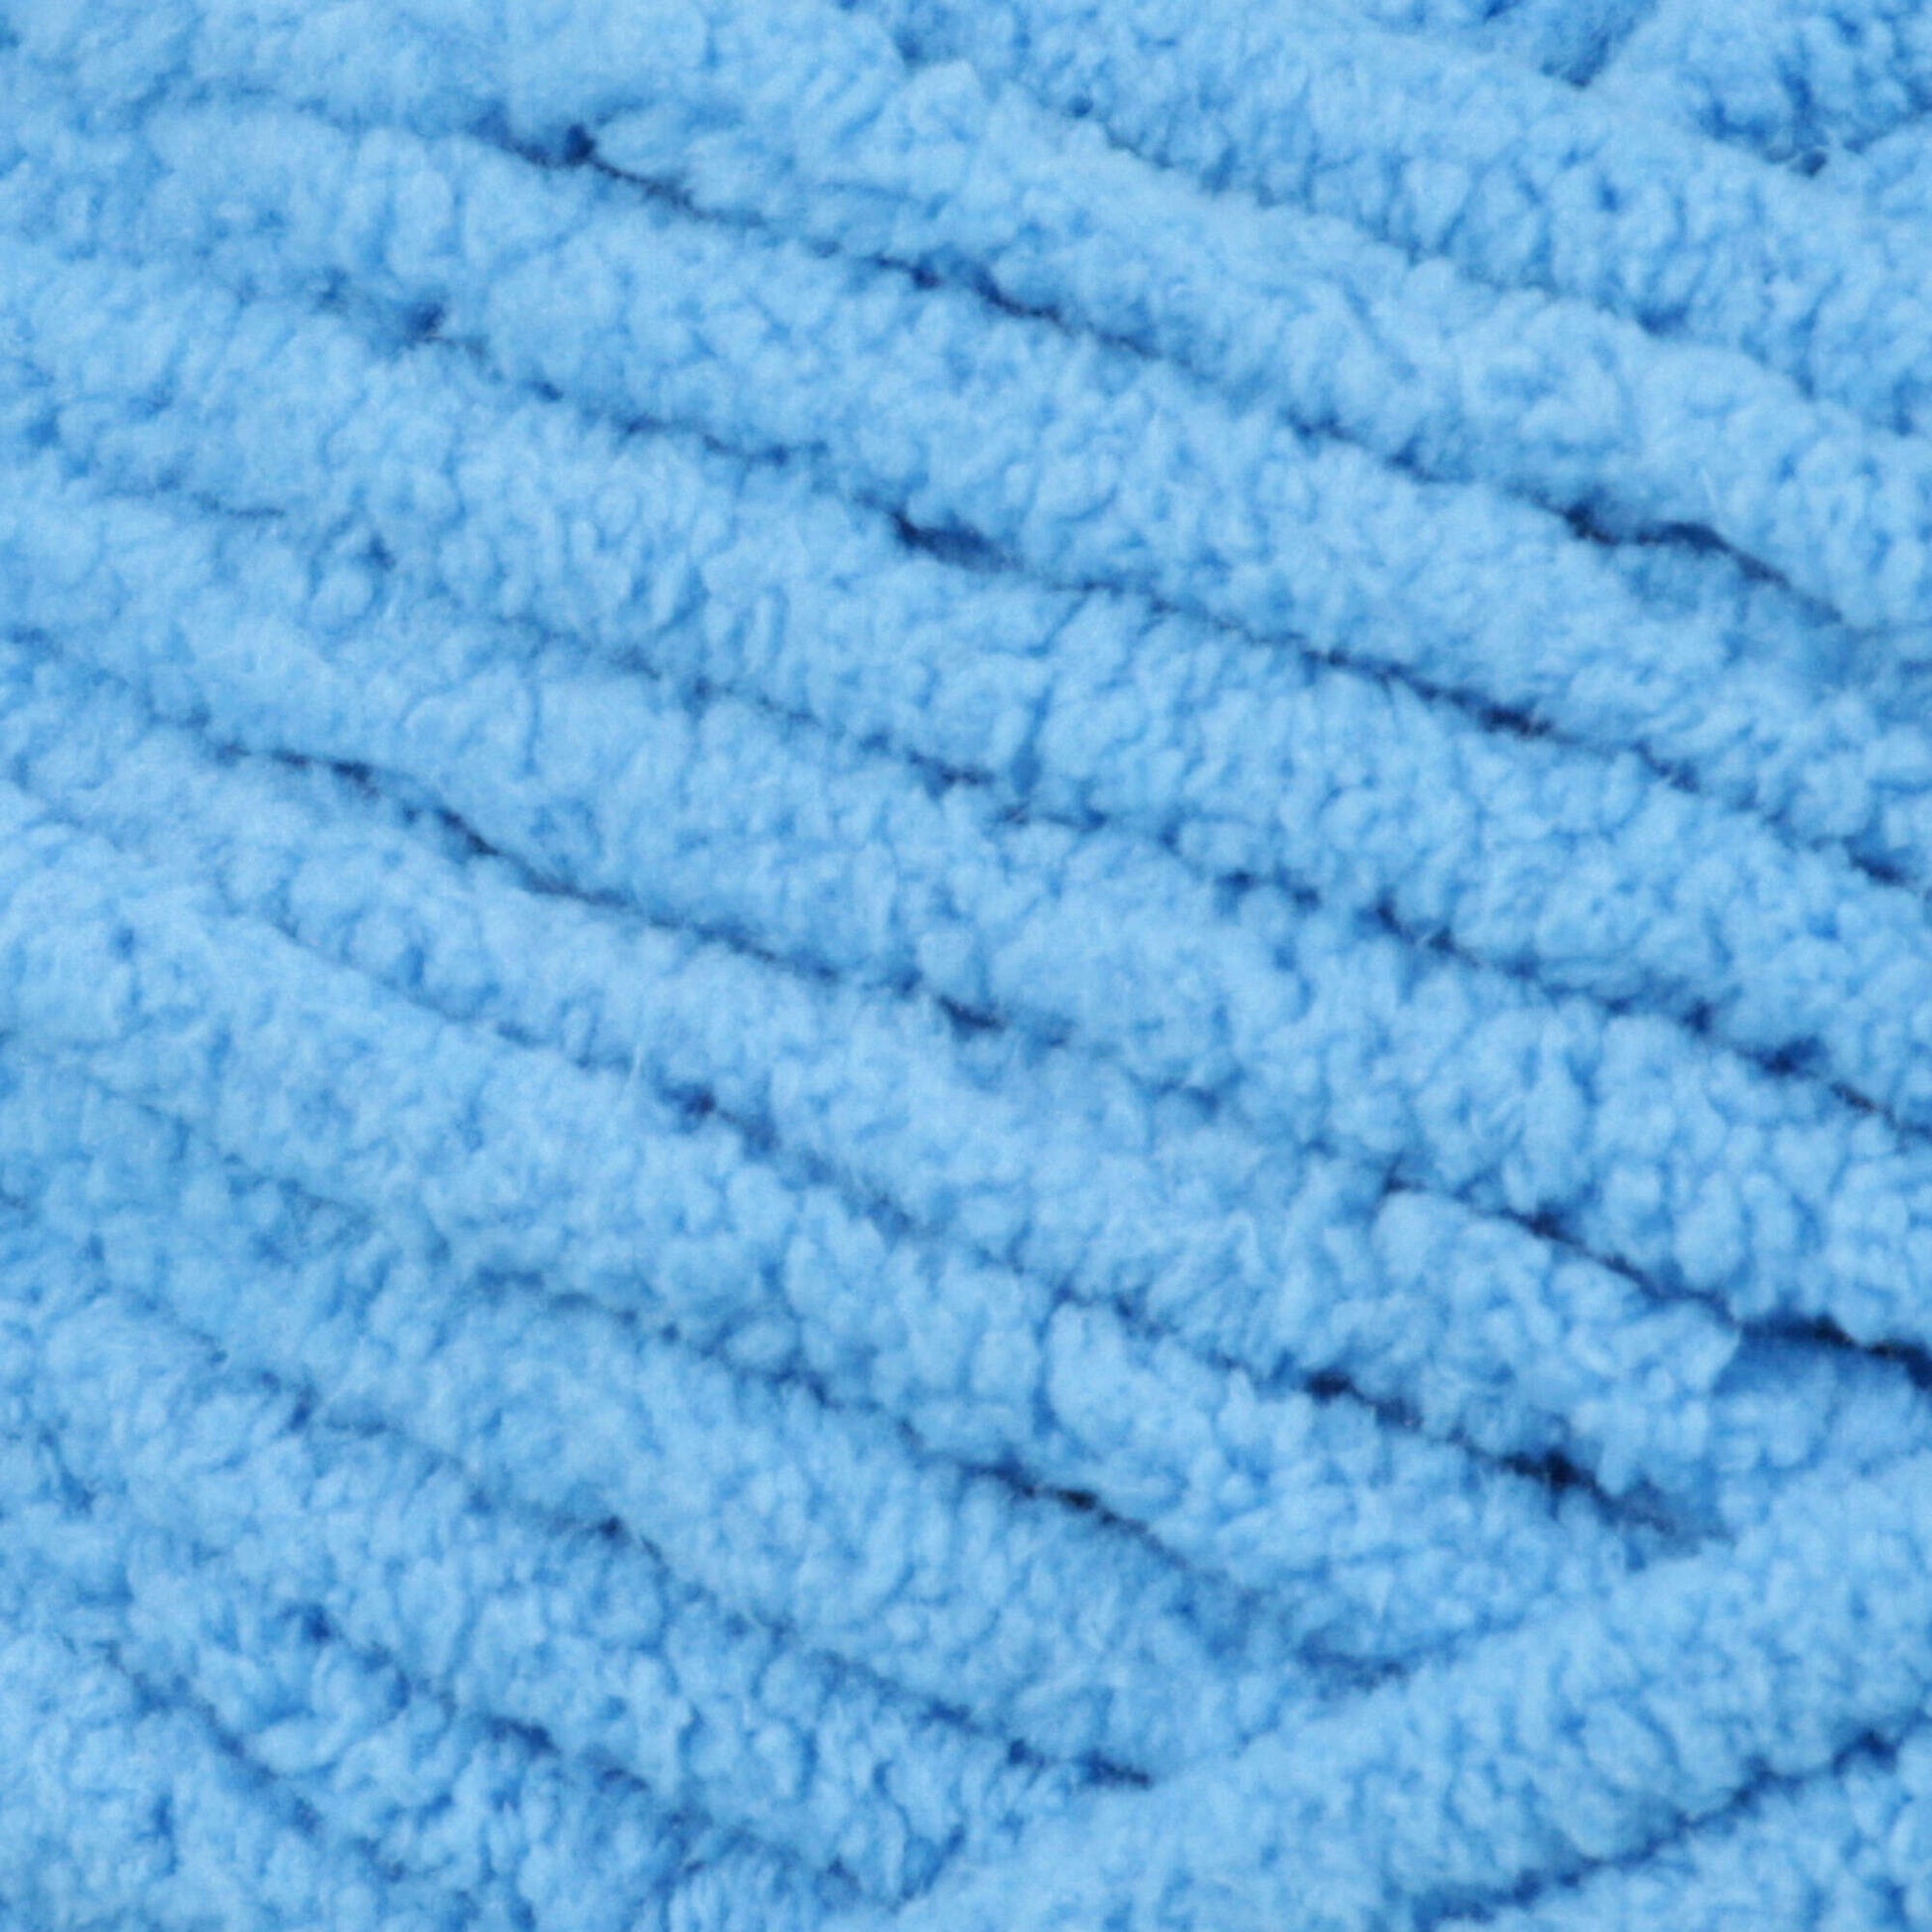 Bernat Blanket Brights SCHOOL BUS YELLOW 12003 Yarn Big 10.5 Oz Skein /  Bernat Blanket Yarn New Colors 